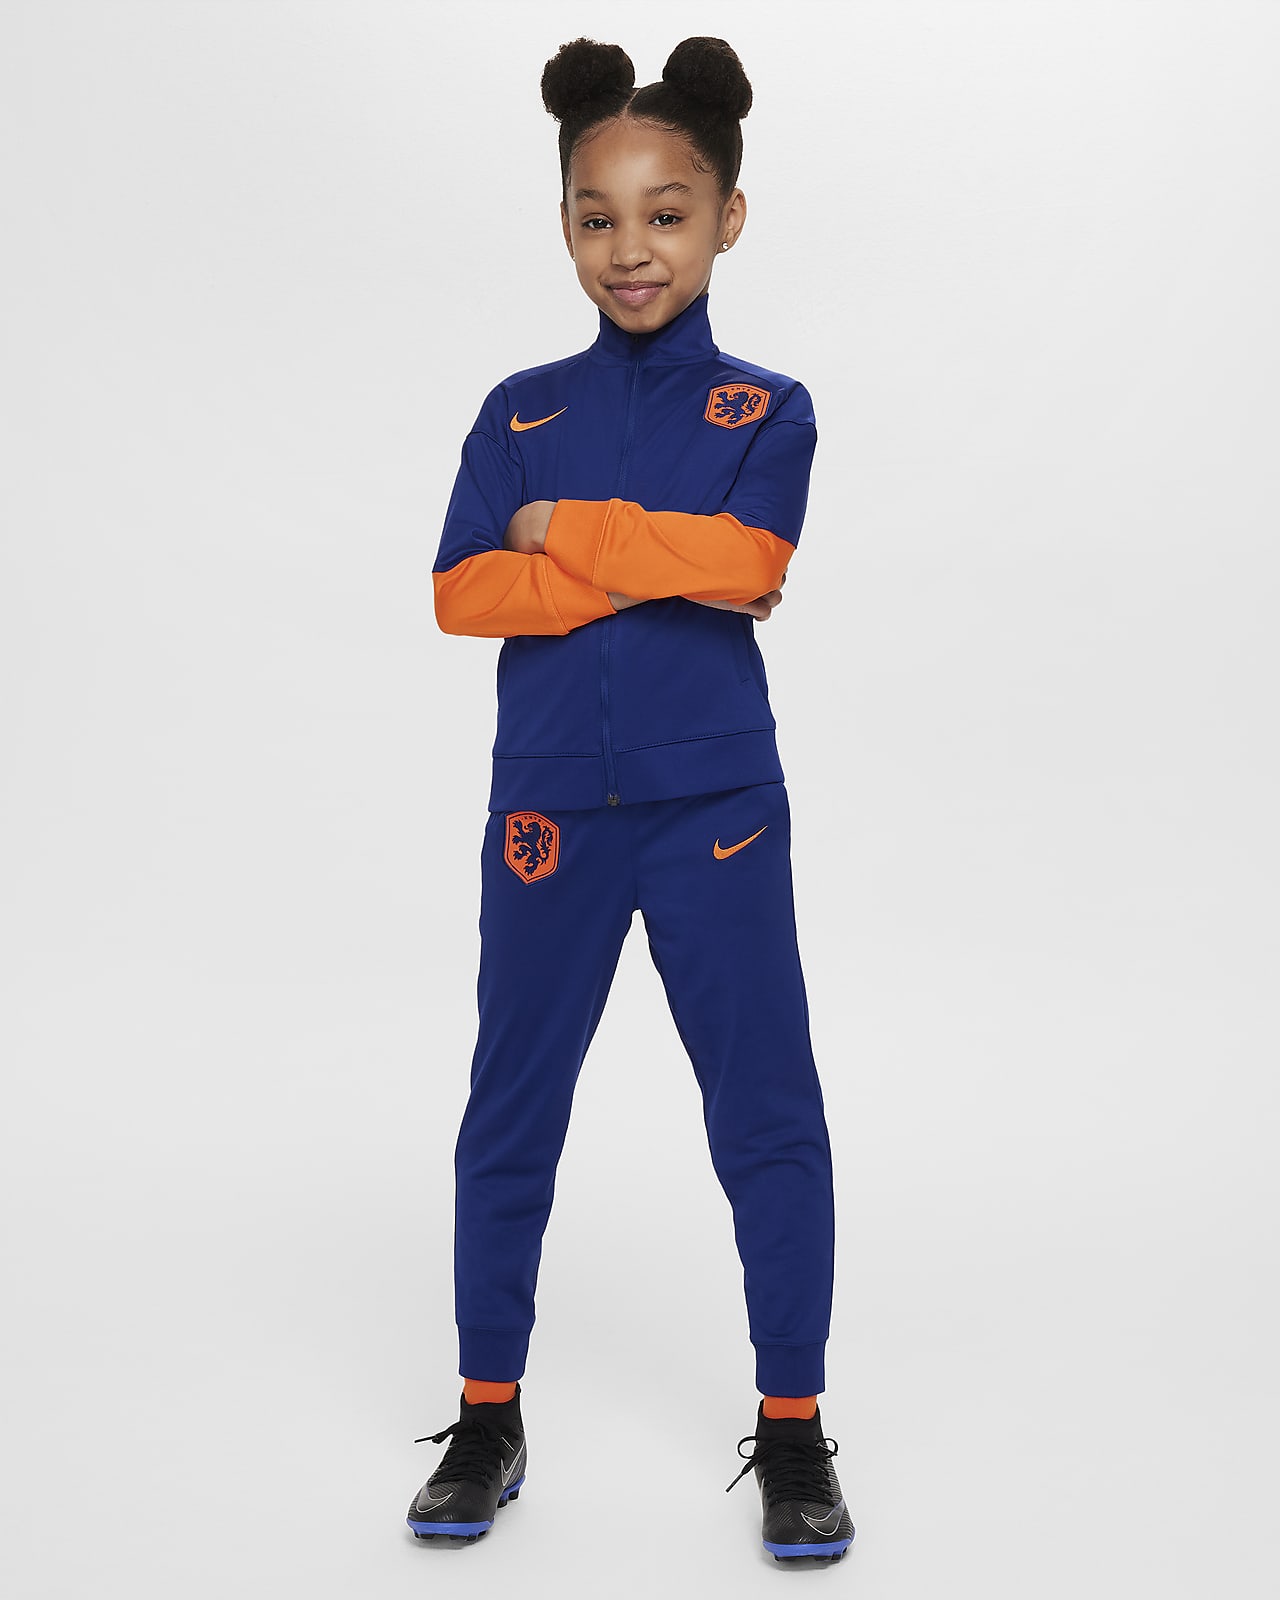 Nederland Strike Nike Dri-FIT knit voetbaltrainingspak voor kleuters